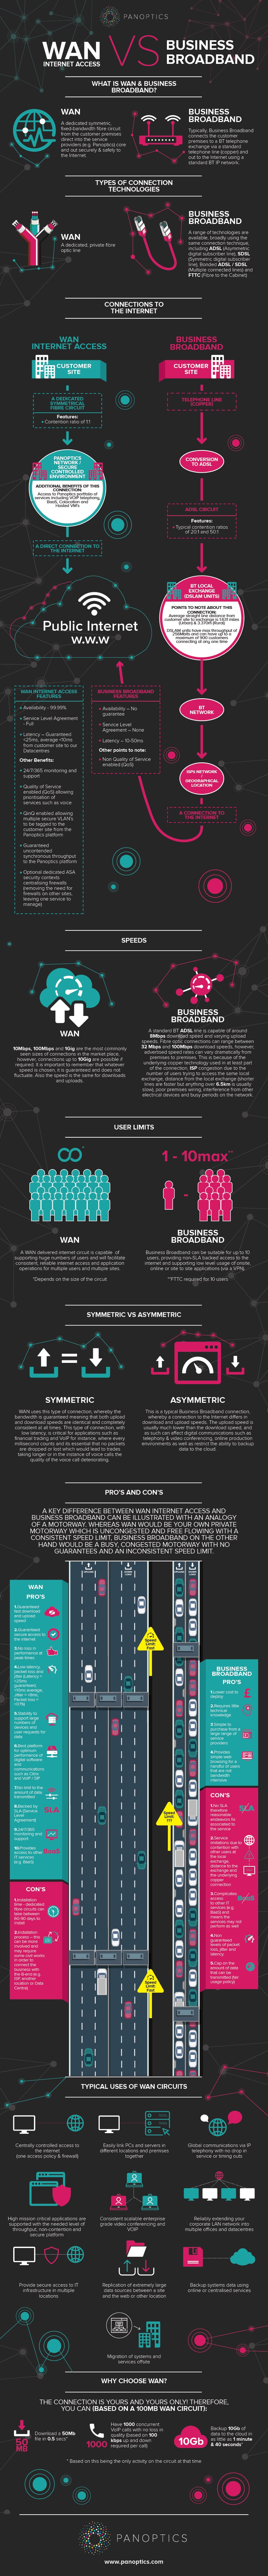 WAN vs Business Broadband